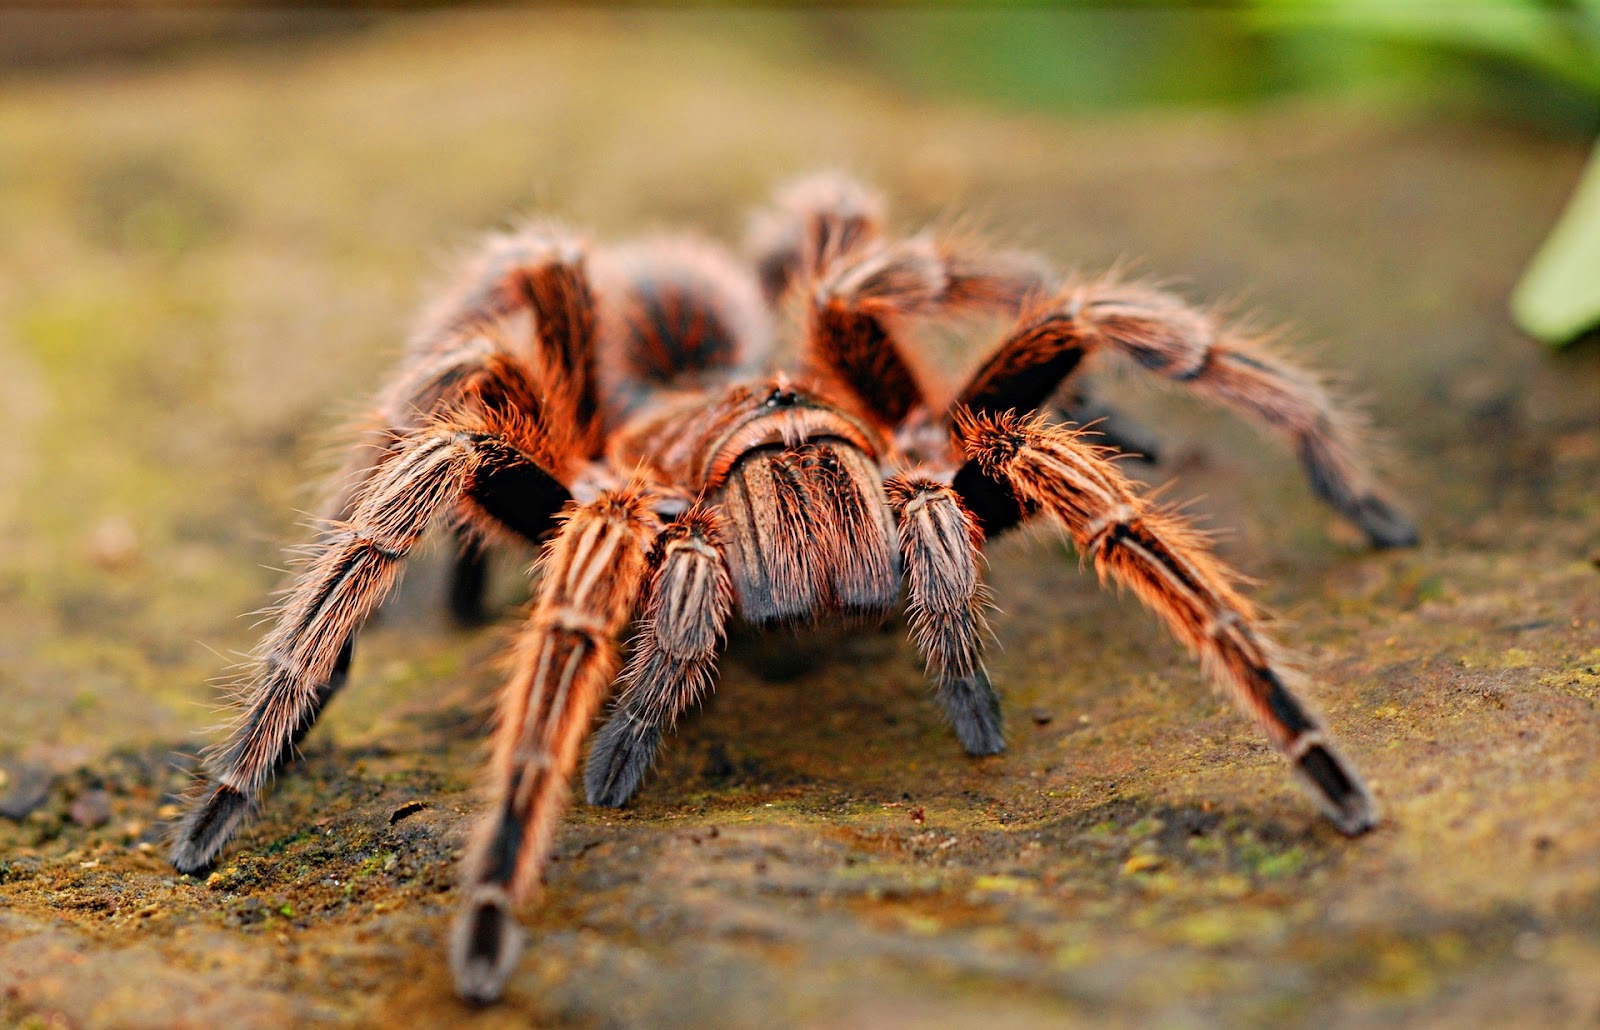 Where should I buy my tarantula supplies from? Enclosures, hides